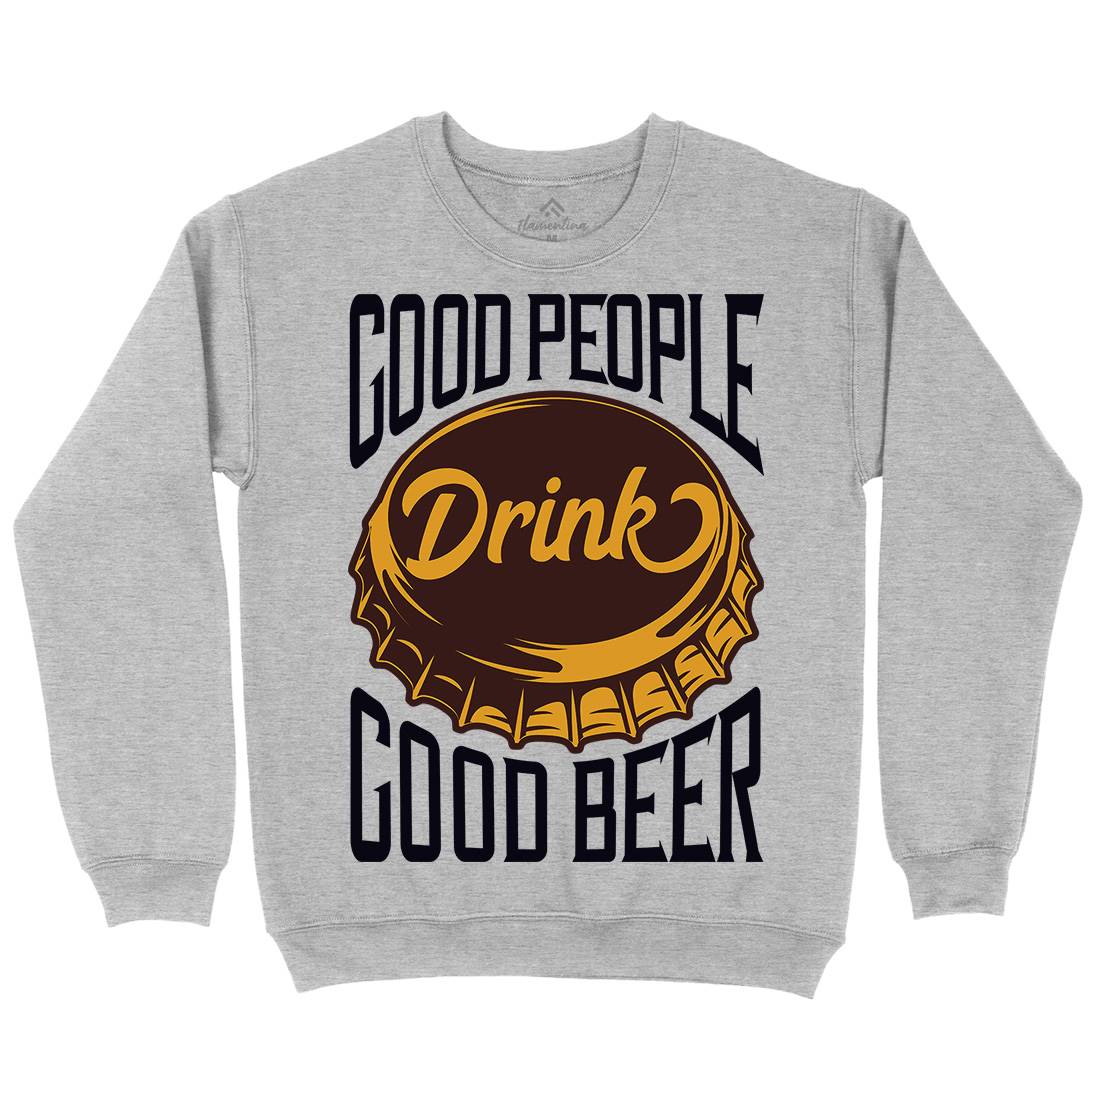 Good People Drink Beer Mens Crew Neck Sweatshirt Drinks B287